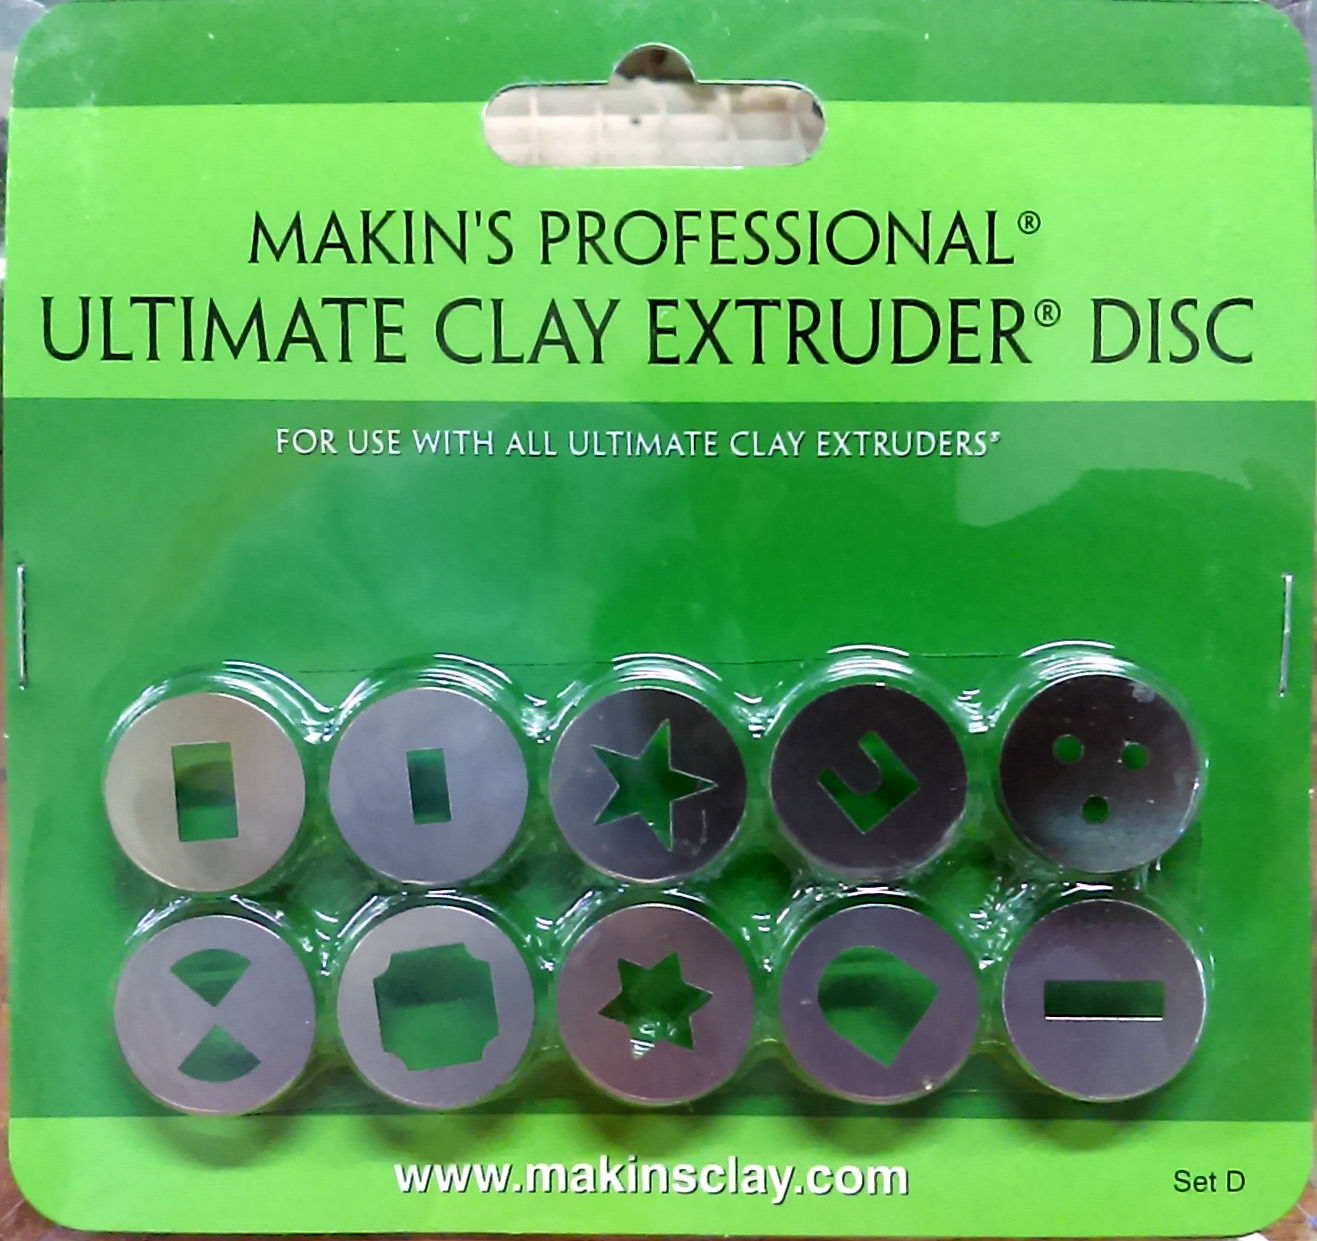 Makins Professional Ultimate Clay Extruder Discs - Set D